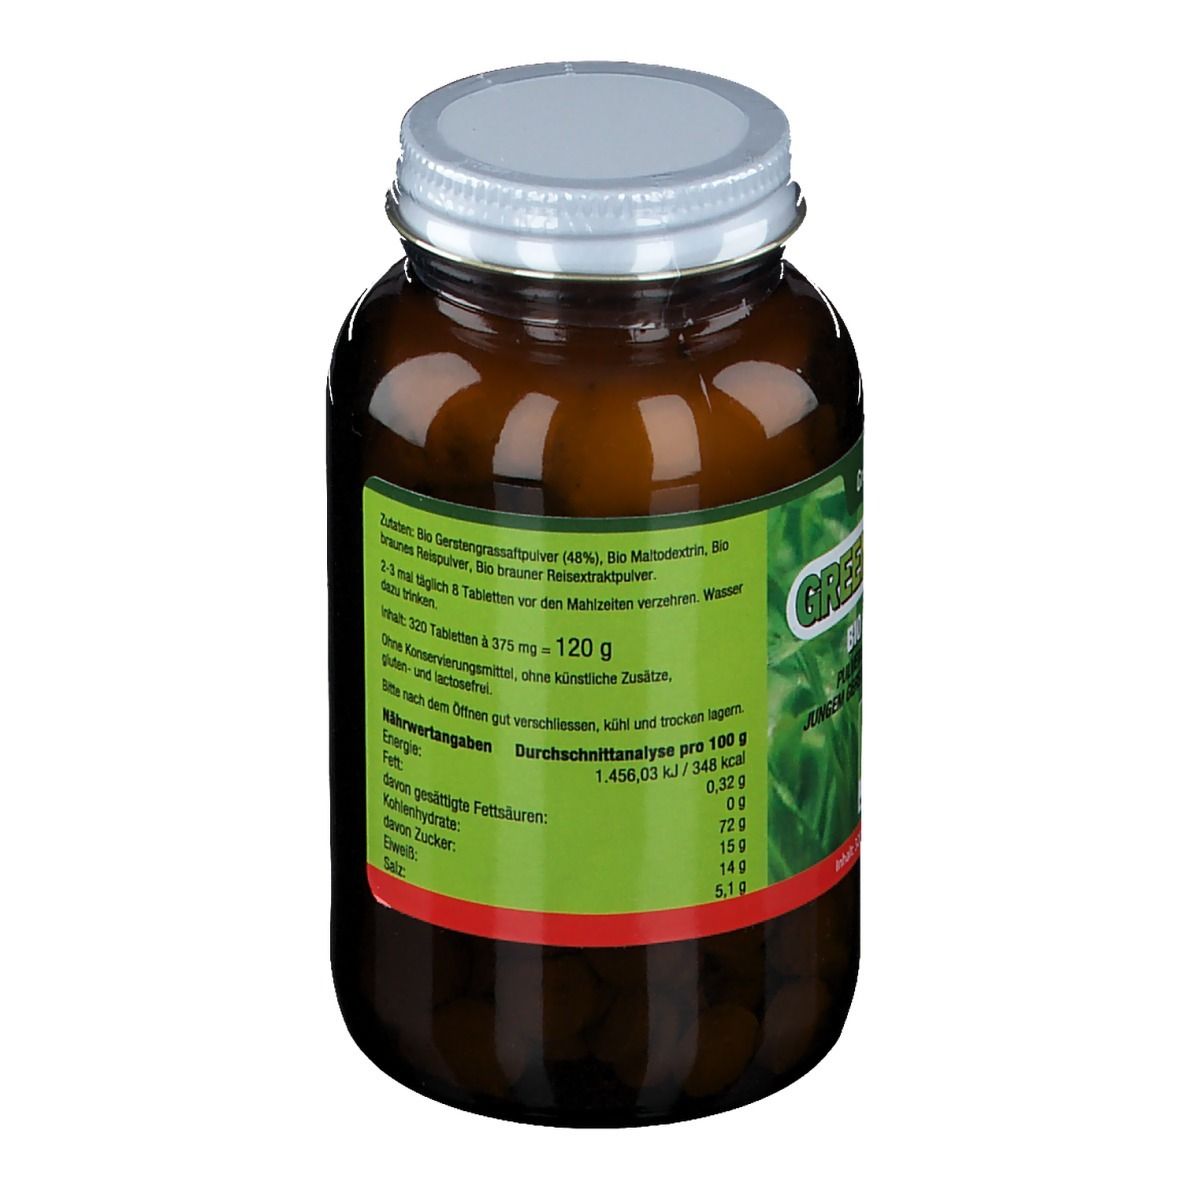 Green Magma® Gerstengrasextrakt Tabletten